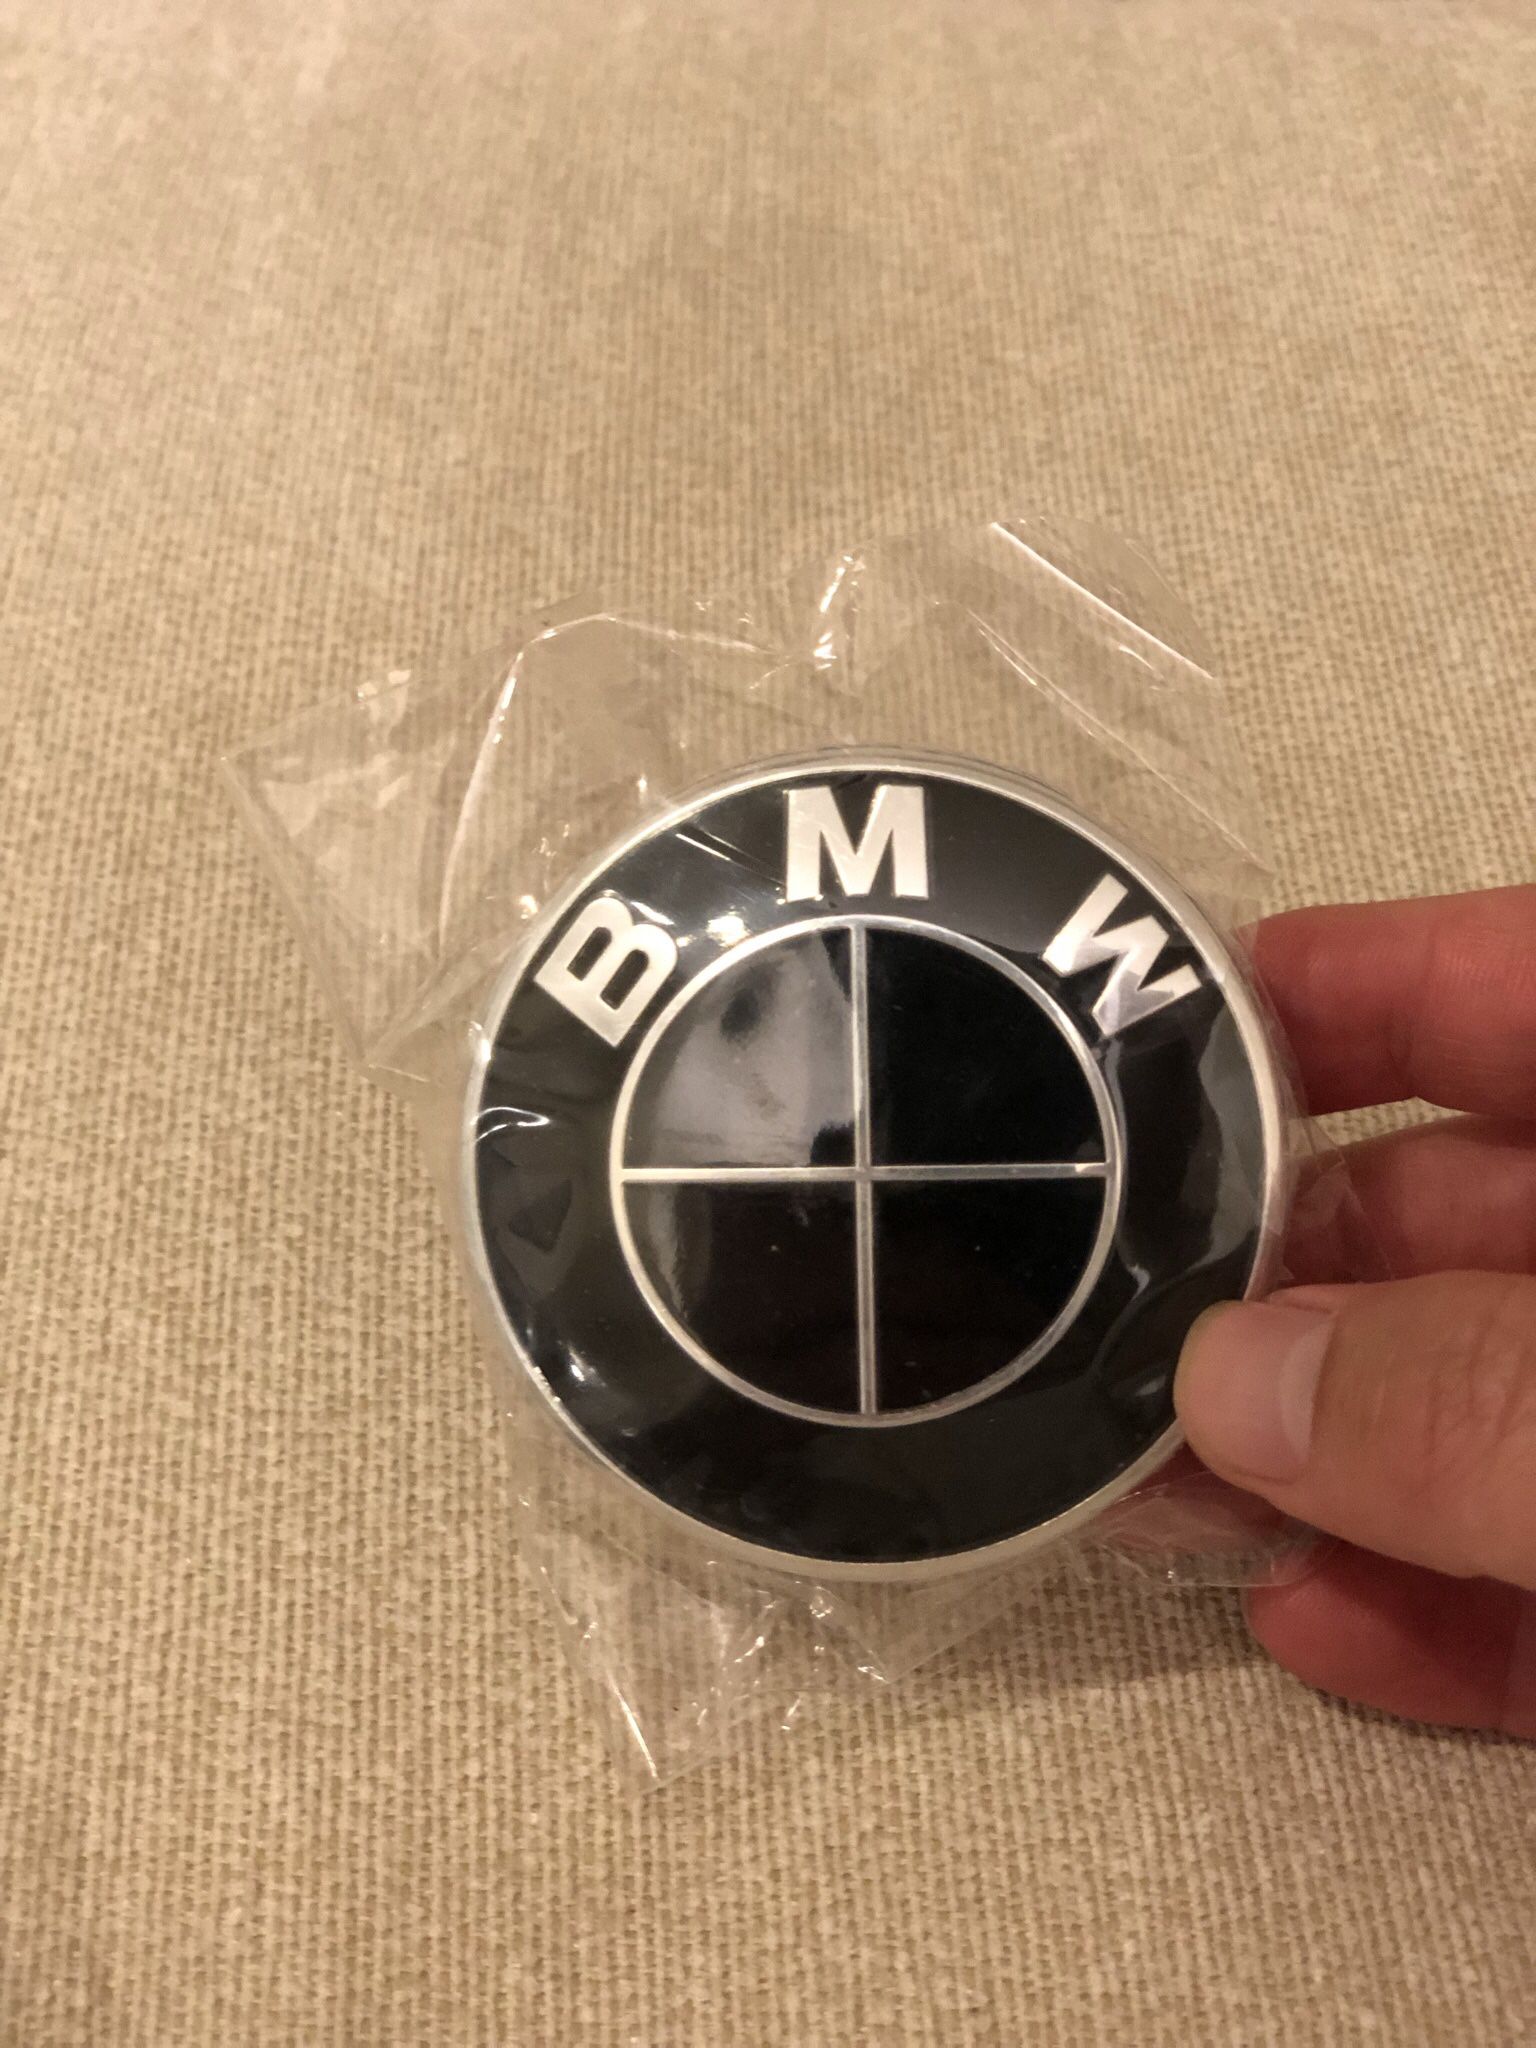 Wheel Center Caps Fits BMW Rims 68mm